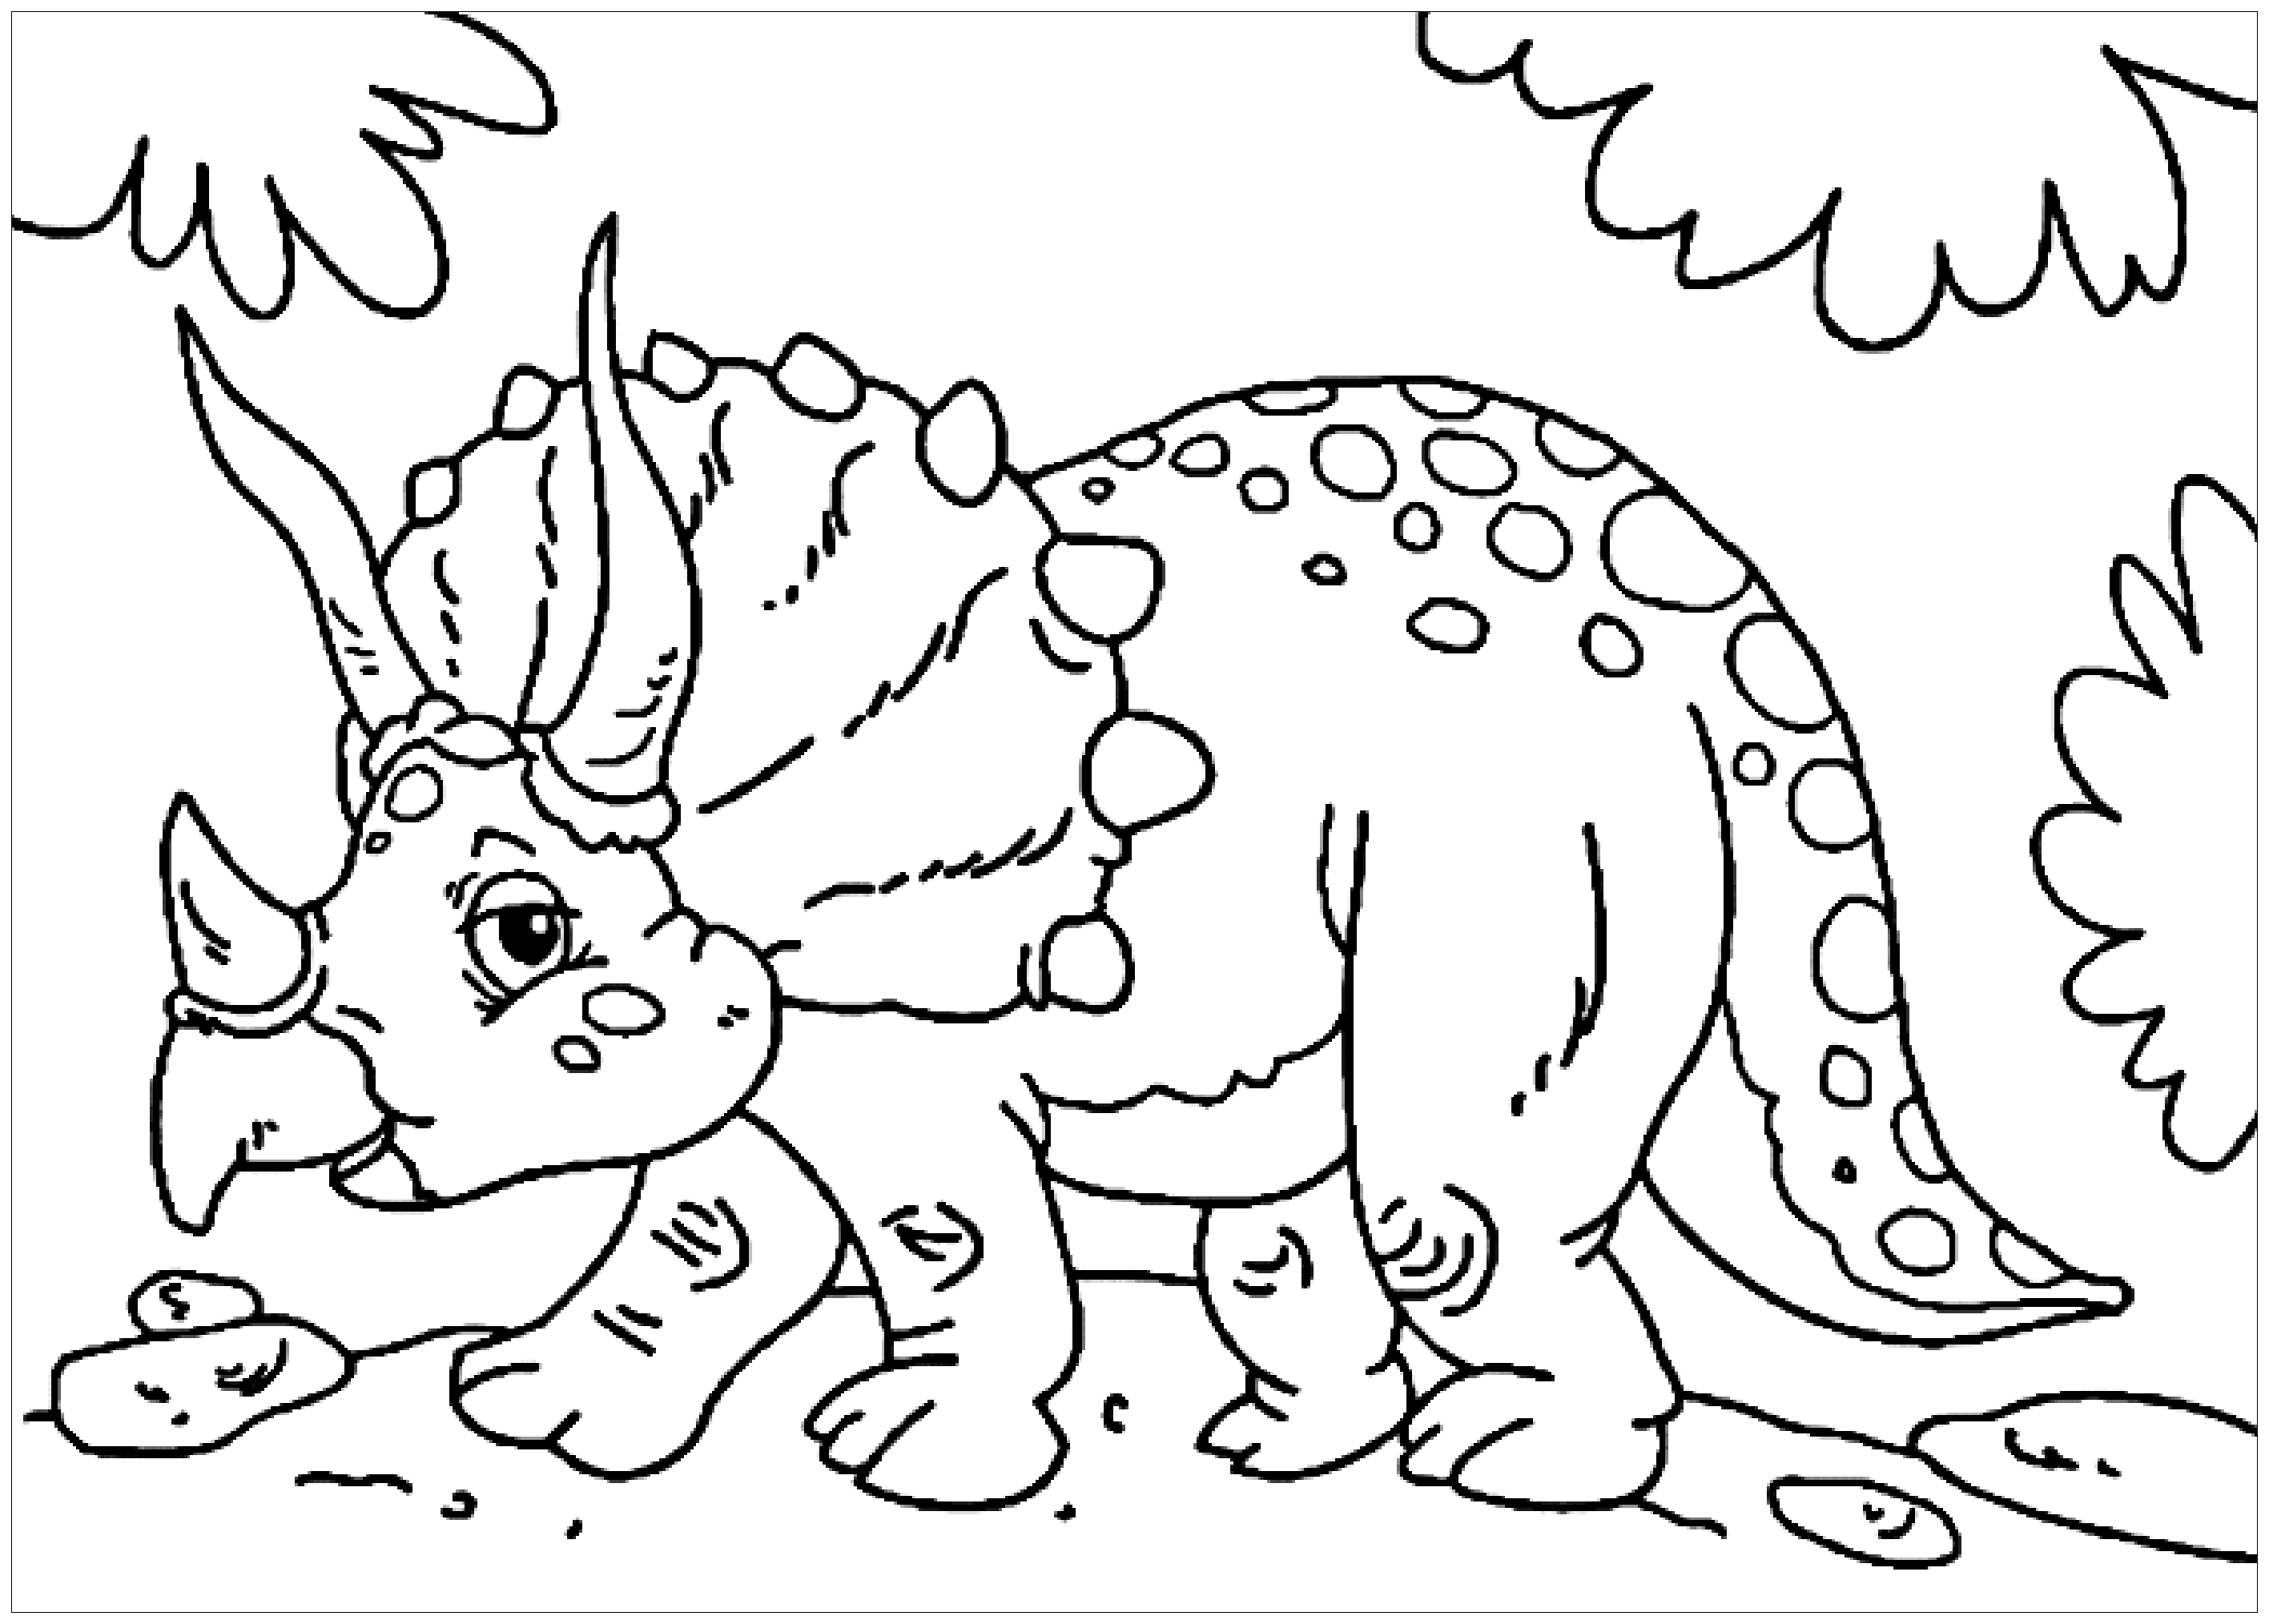 Download Dinosaurs for children : Triceratops - Dinosaurs Kids ...